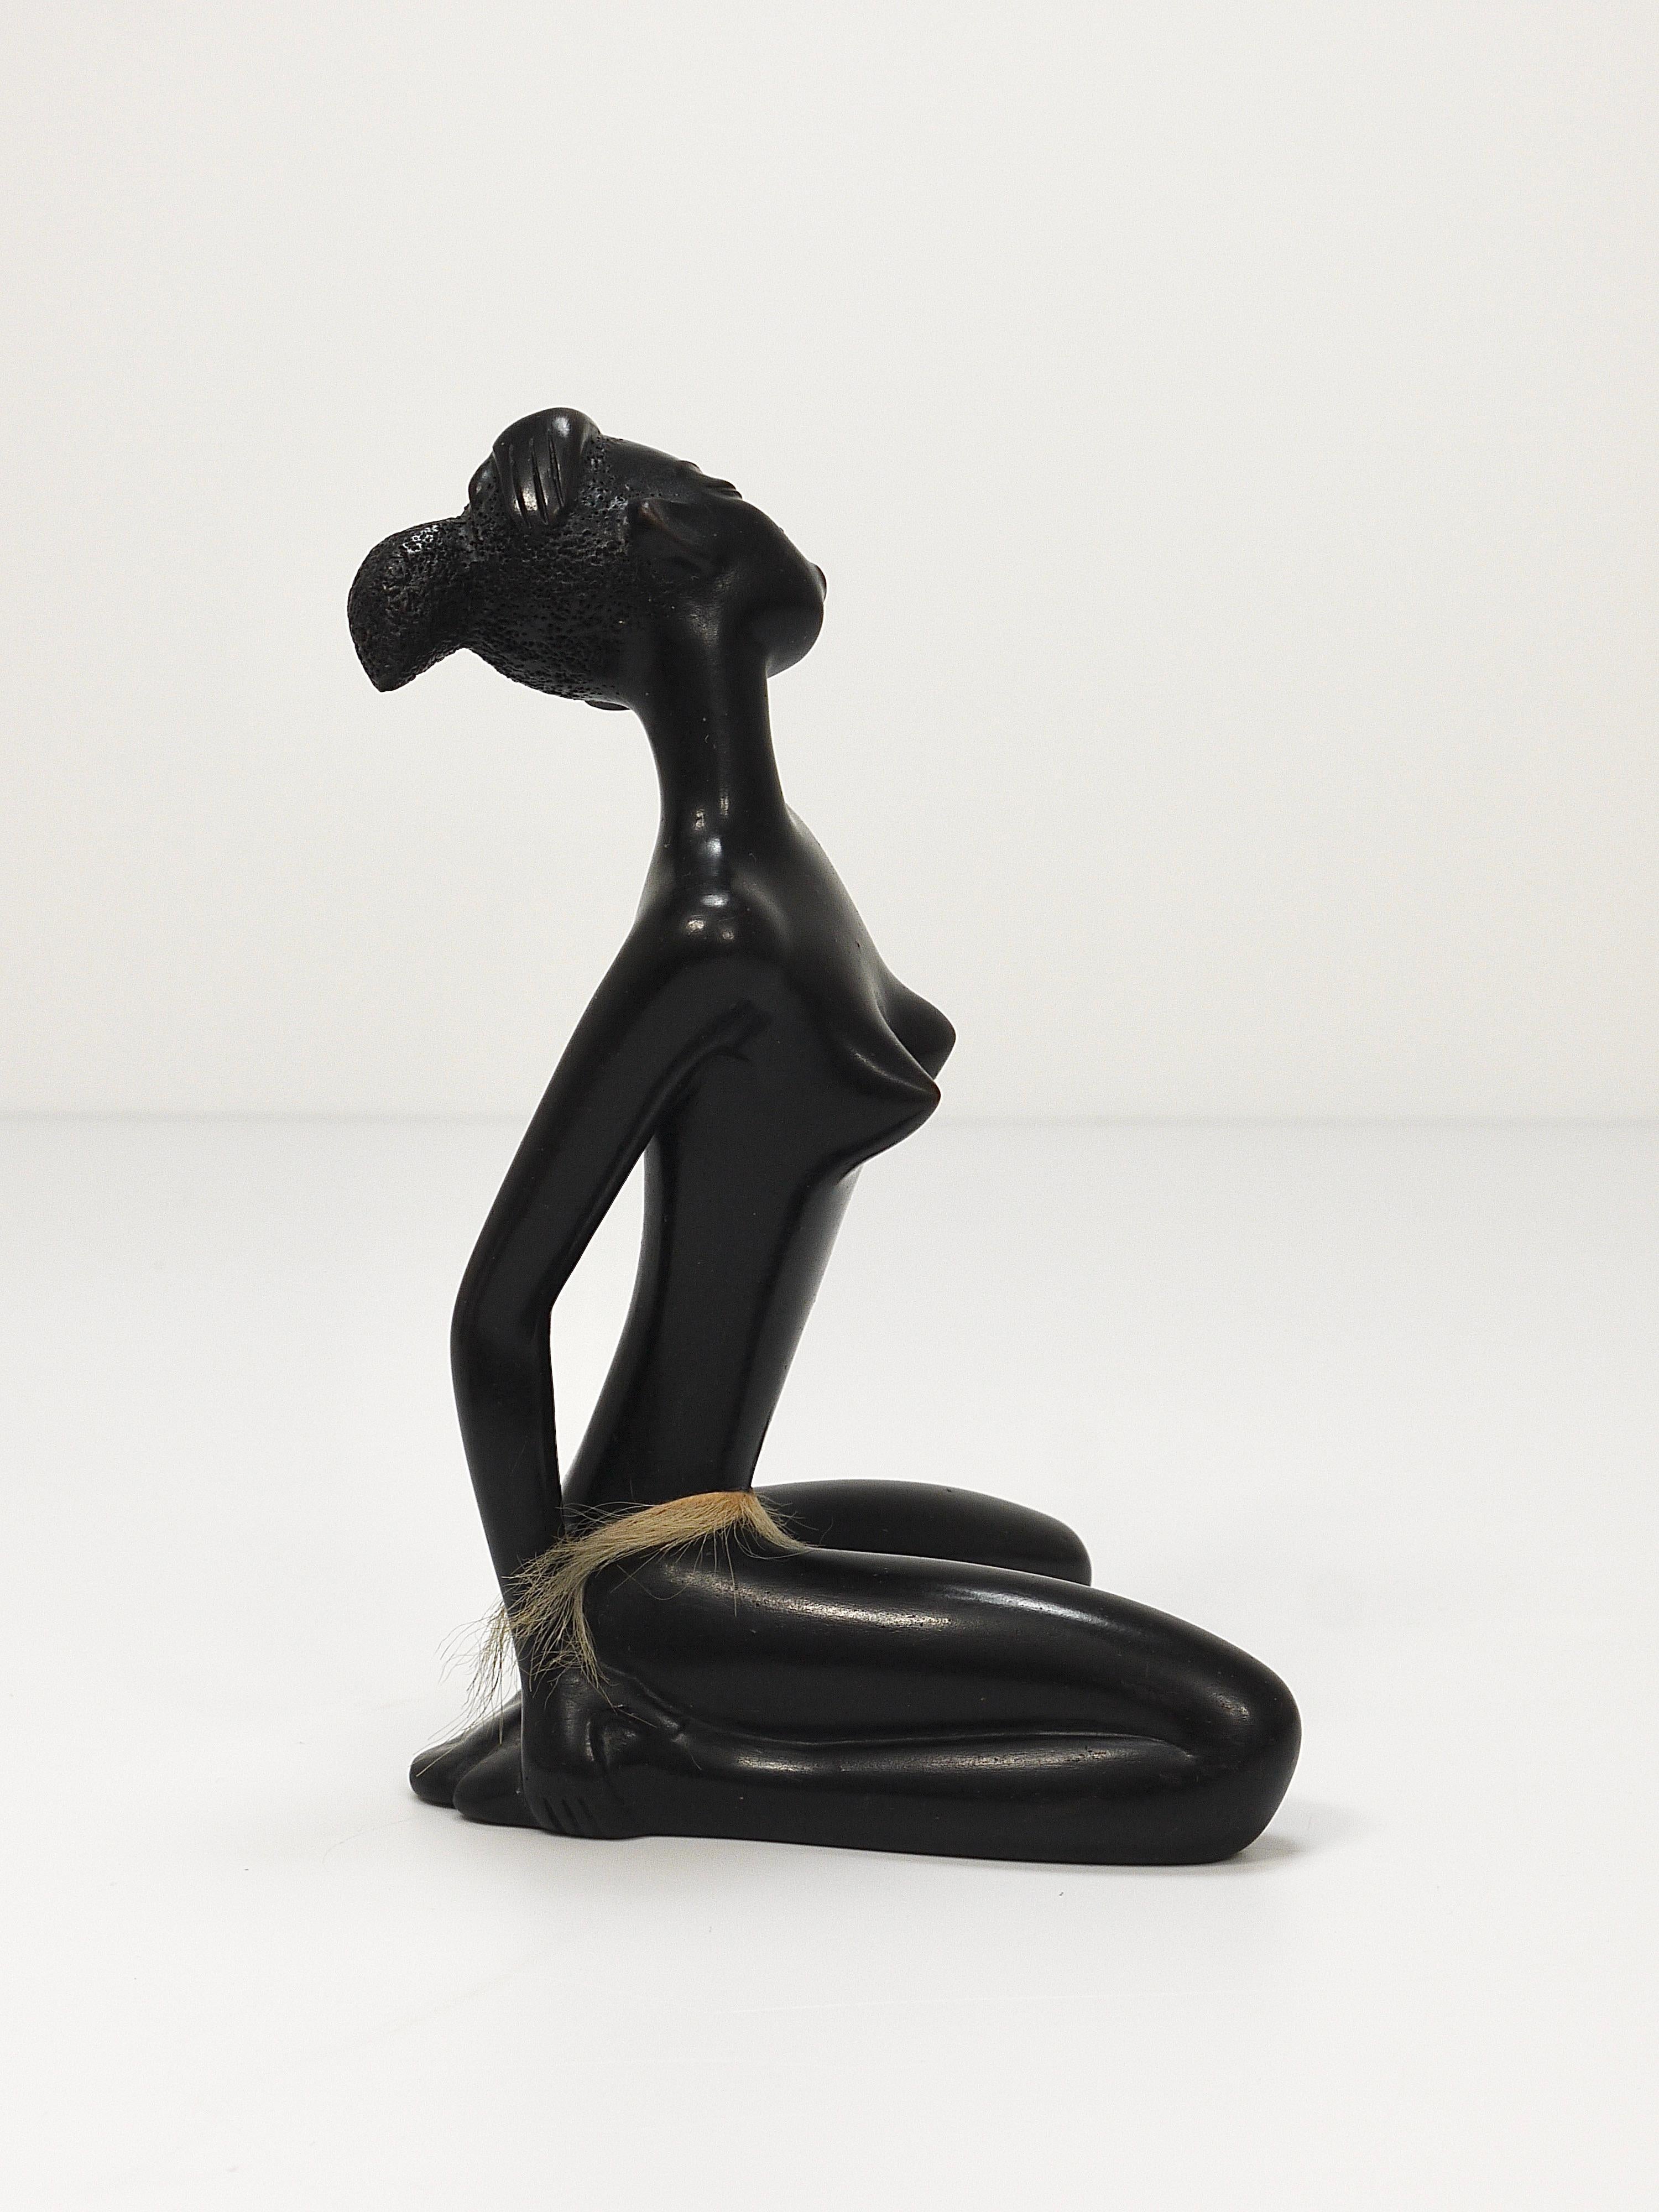 African Woman Figurine Sculpture by Leopold Anzengruber, Vienna, Austria, 1950s For Sale 4